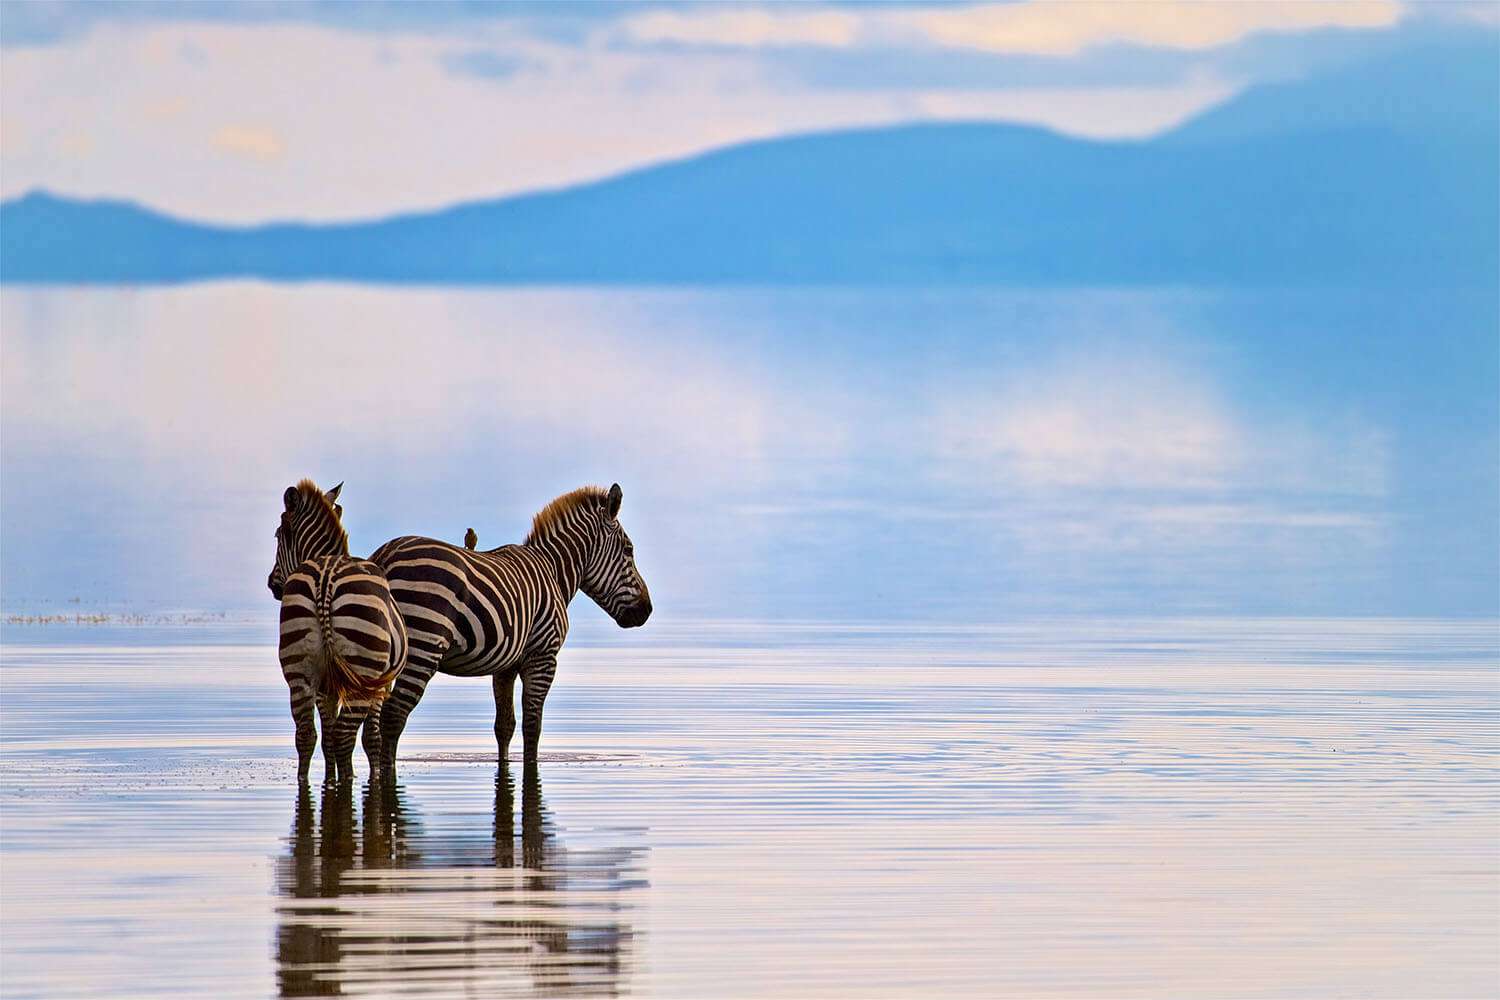 Zebra stand in water